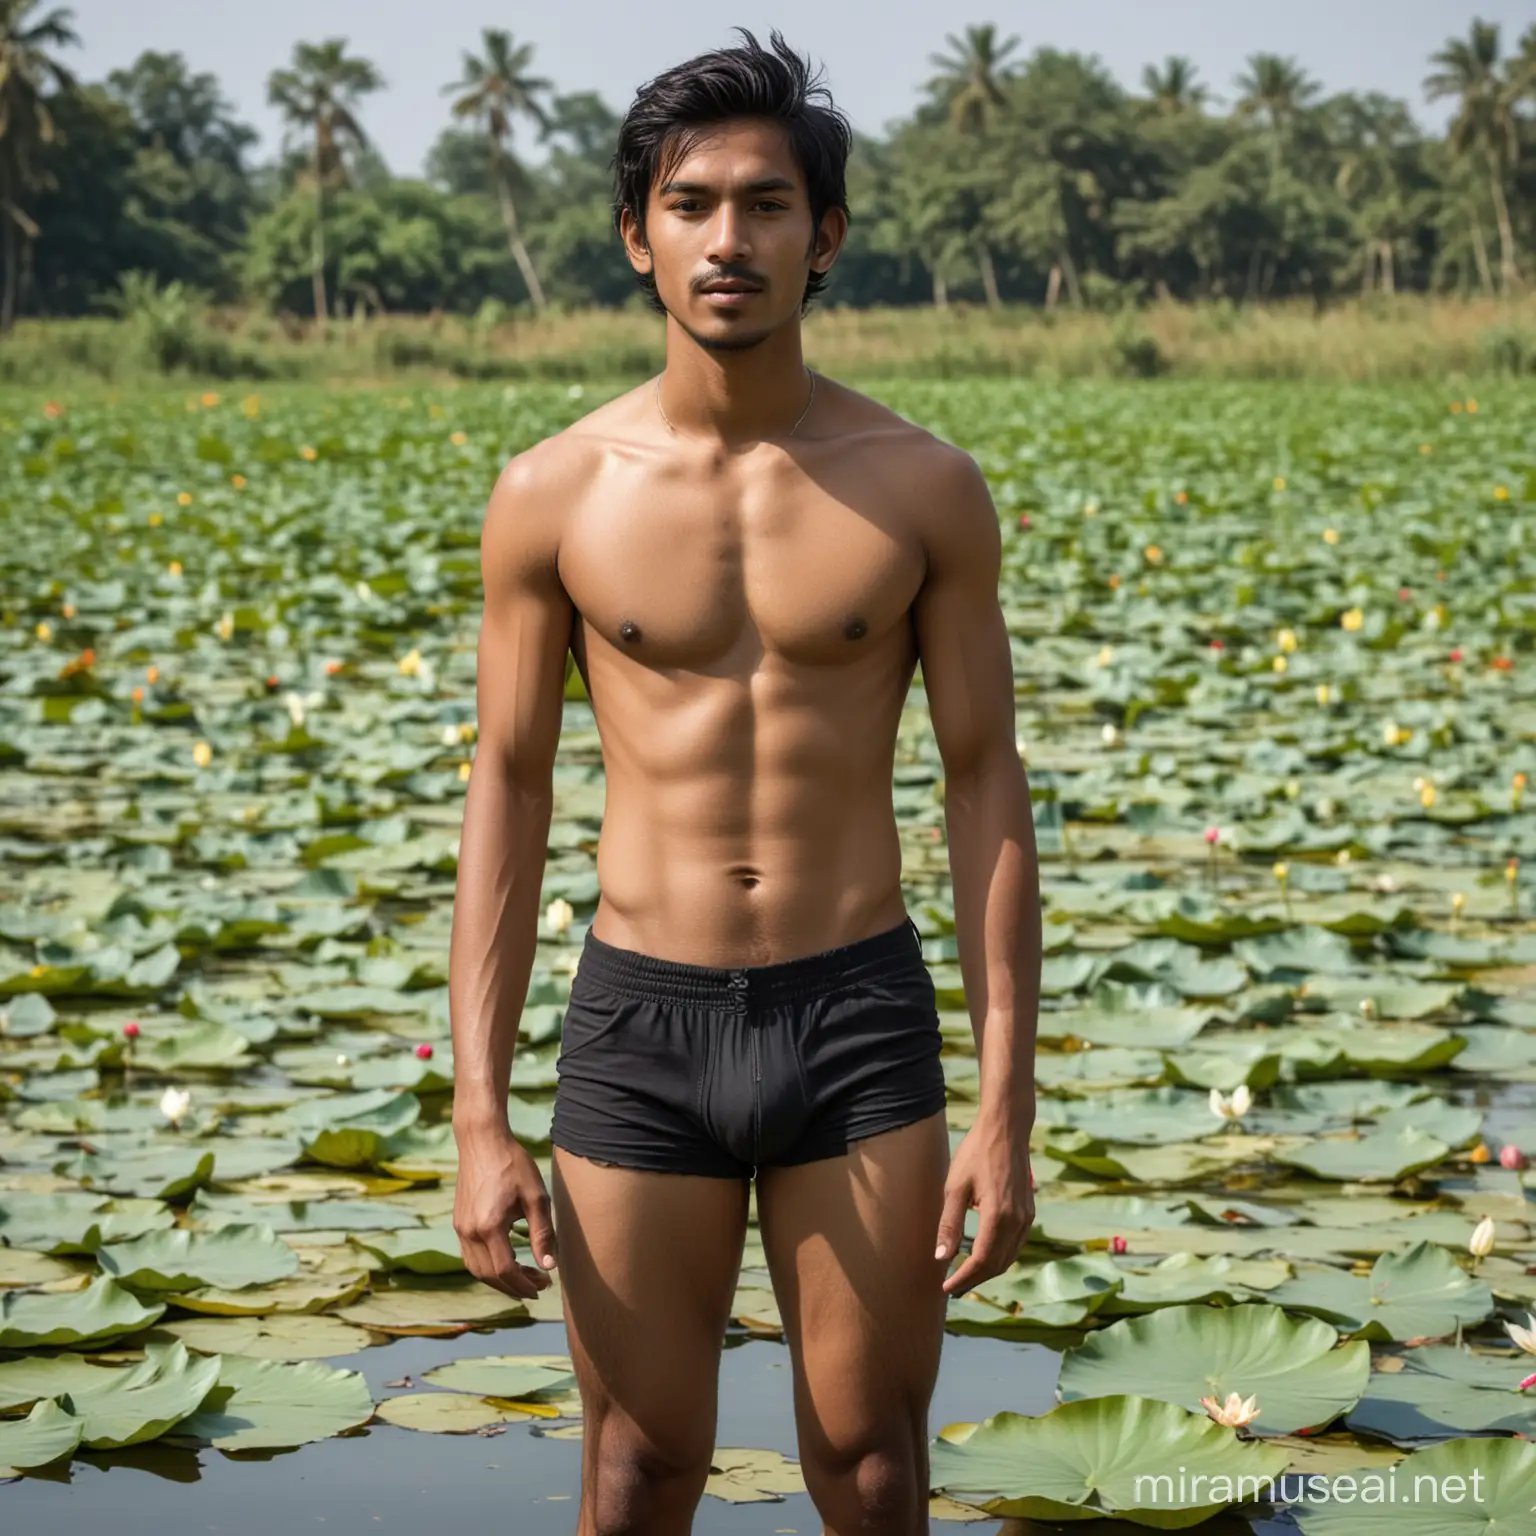 Nepali Man Standing Proud on Lotus Pond